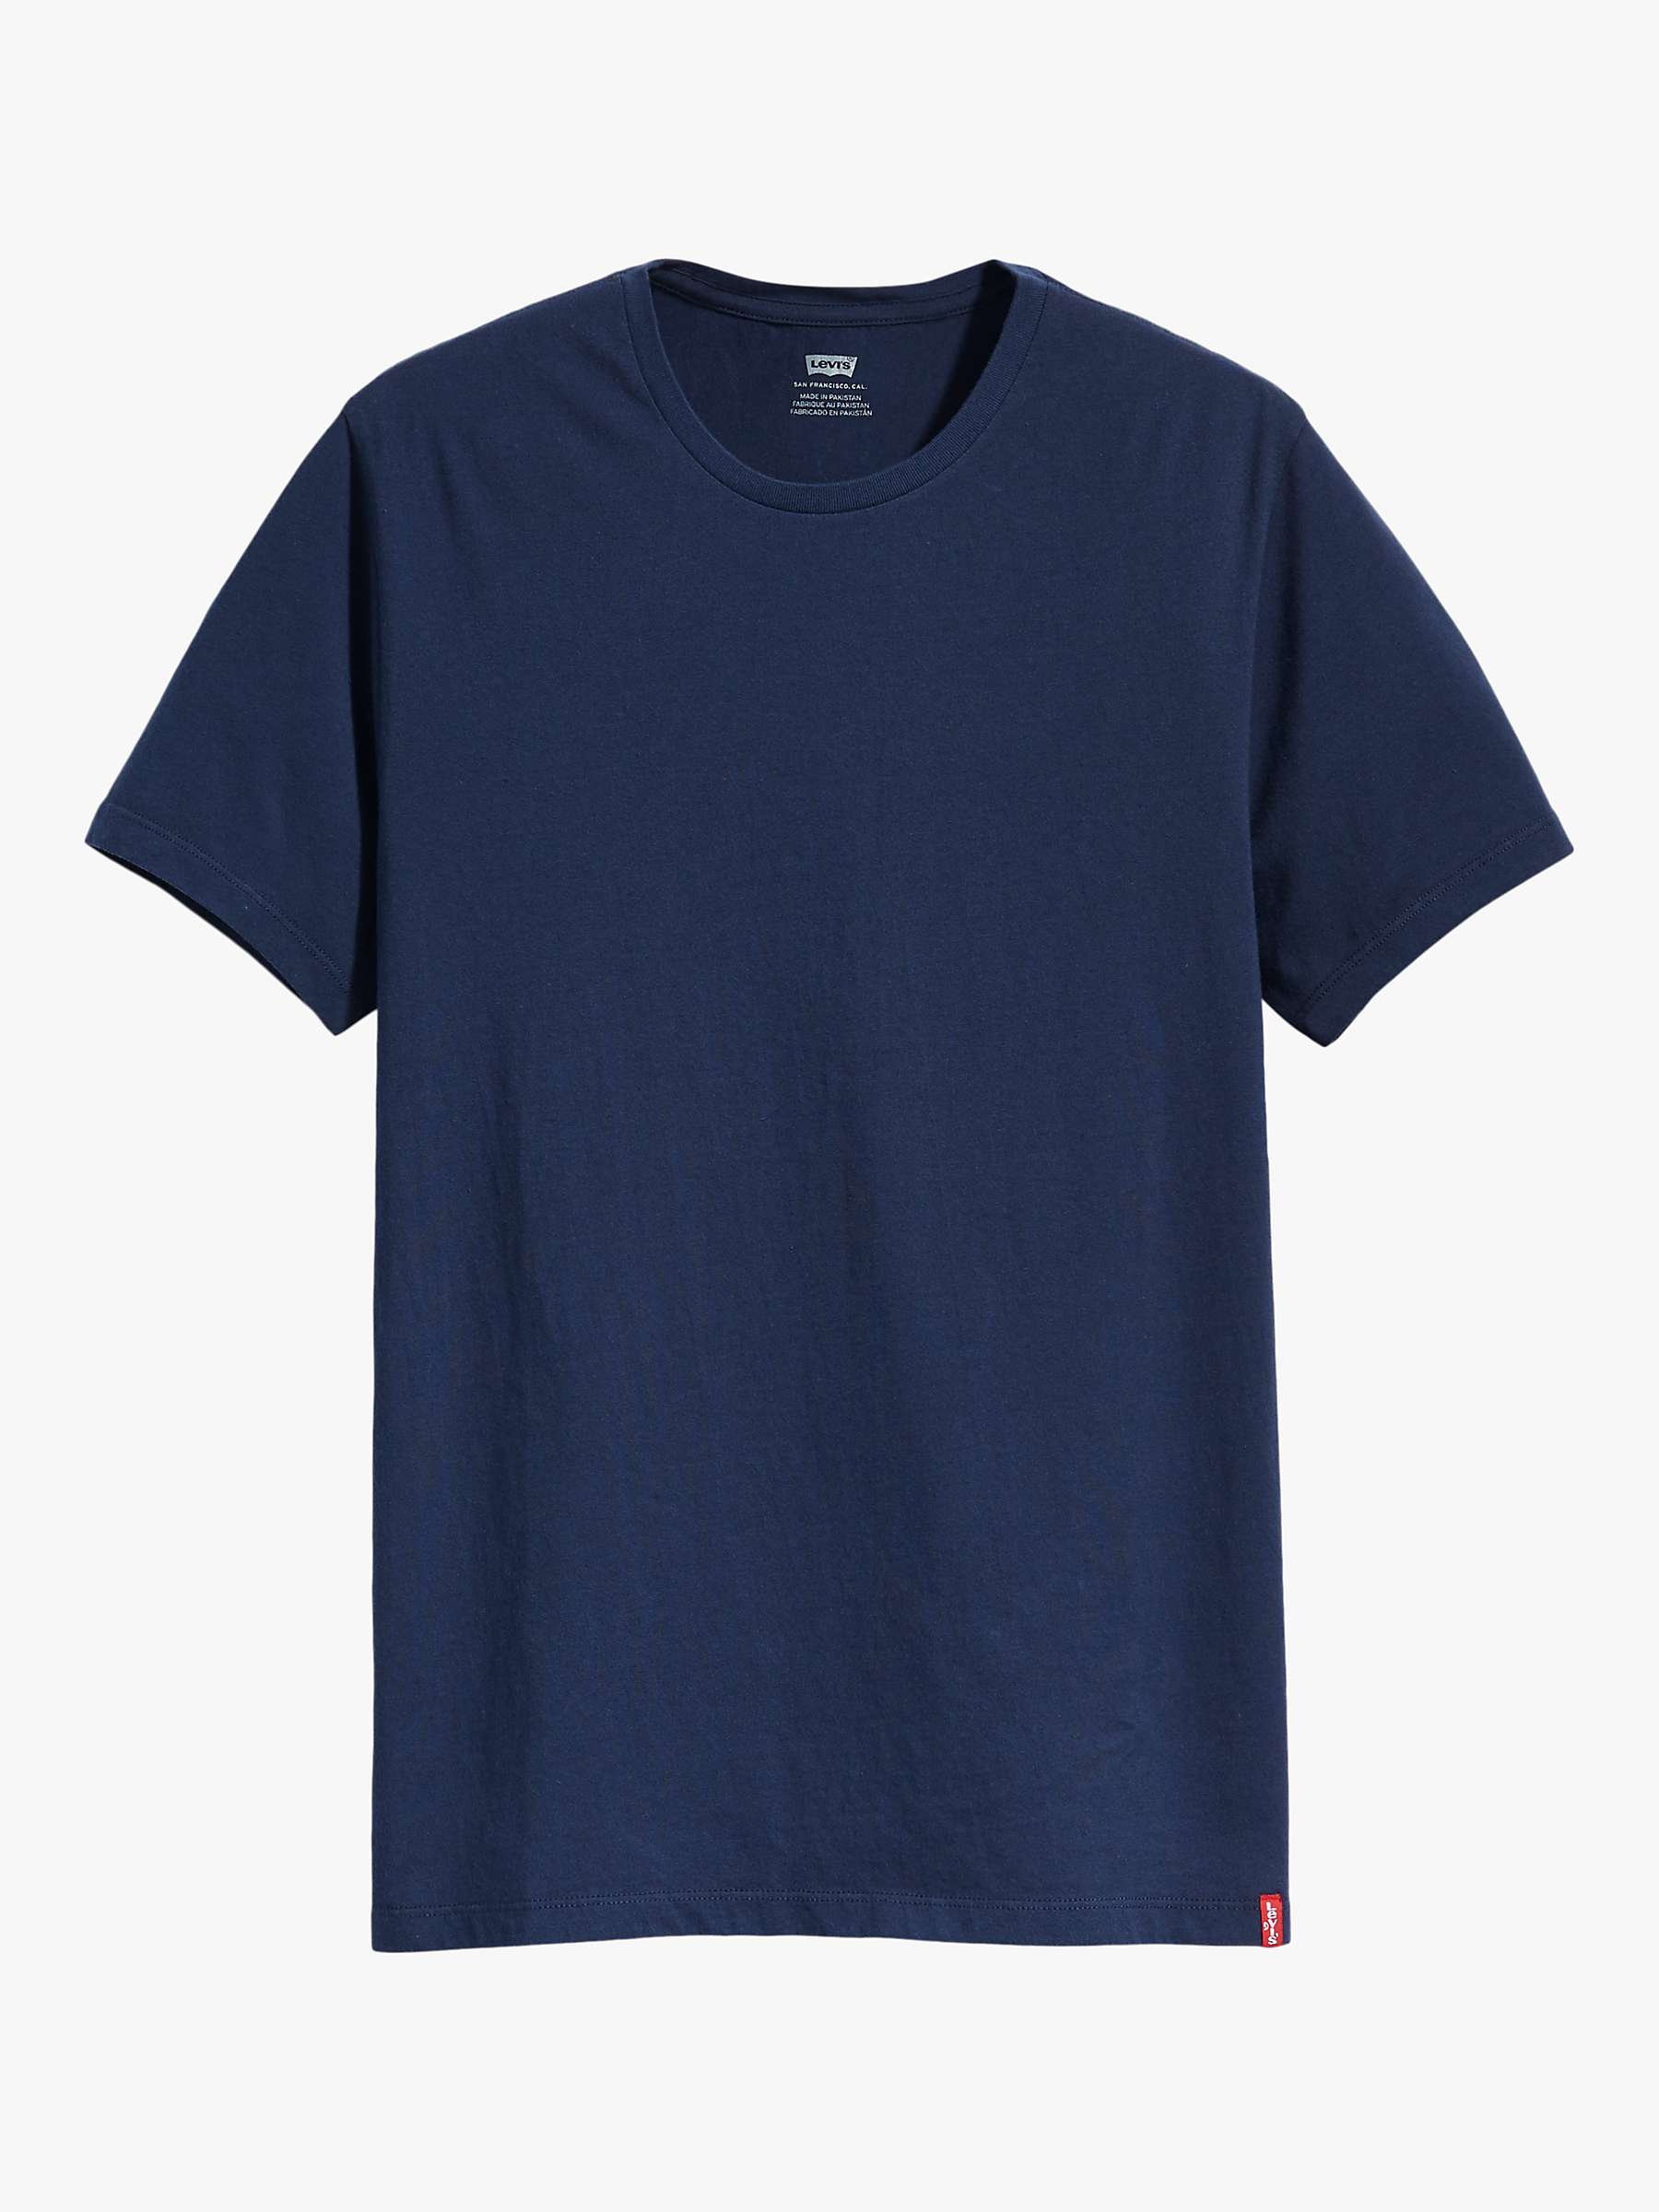 Buy Levi's Cotton Slim Fit Crew Neck T-Shirt, Pack of 2 Online at johnlewis.com